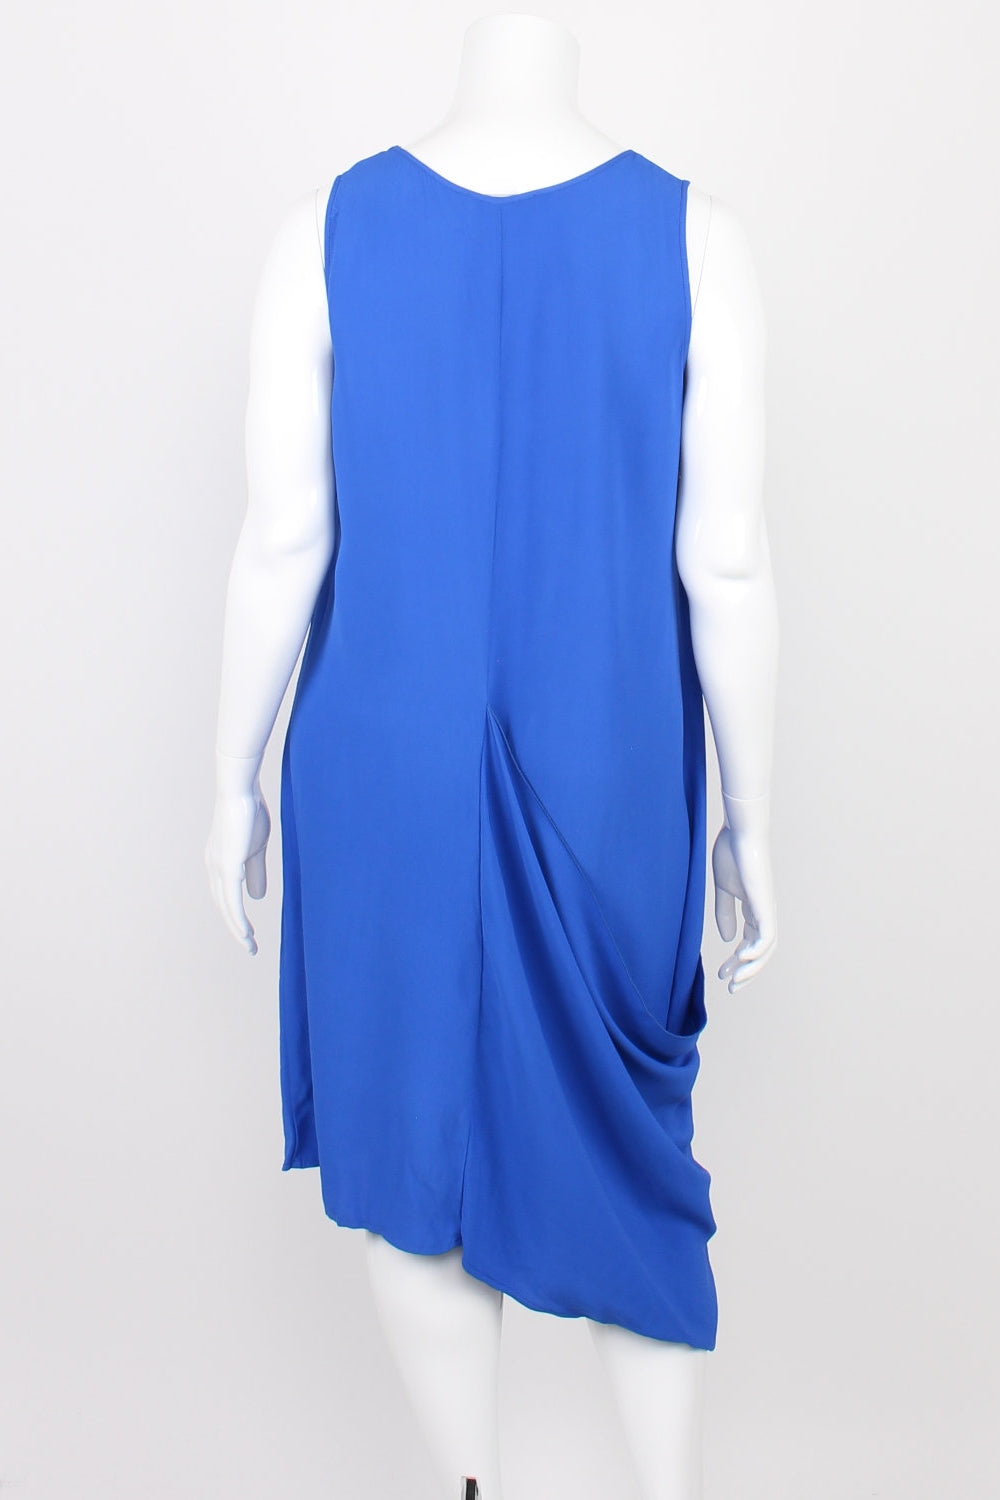 Ricochet Blue Sleeveless Dress 14